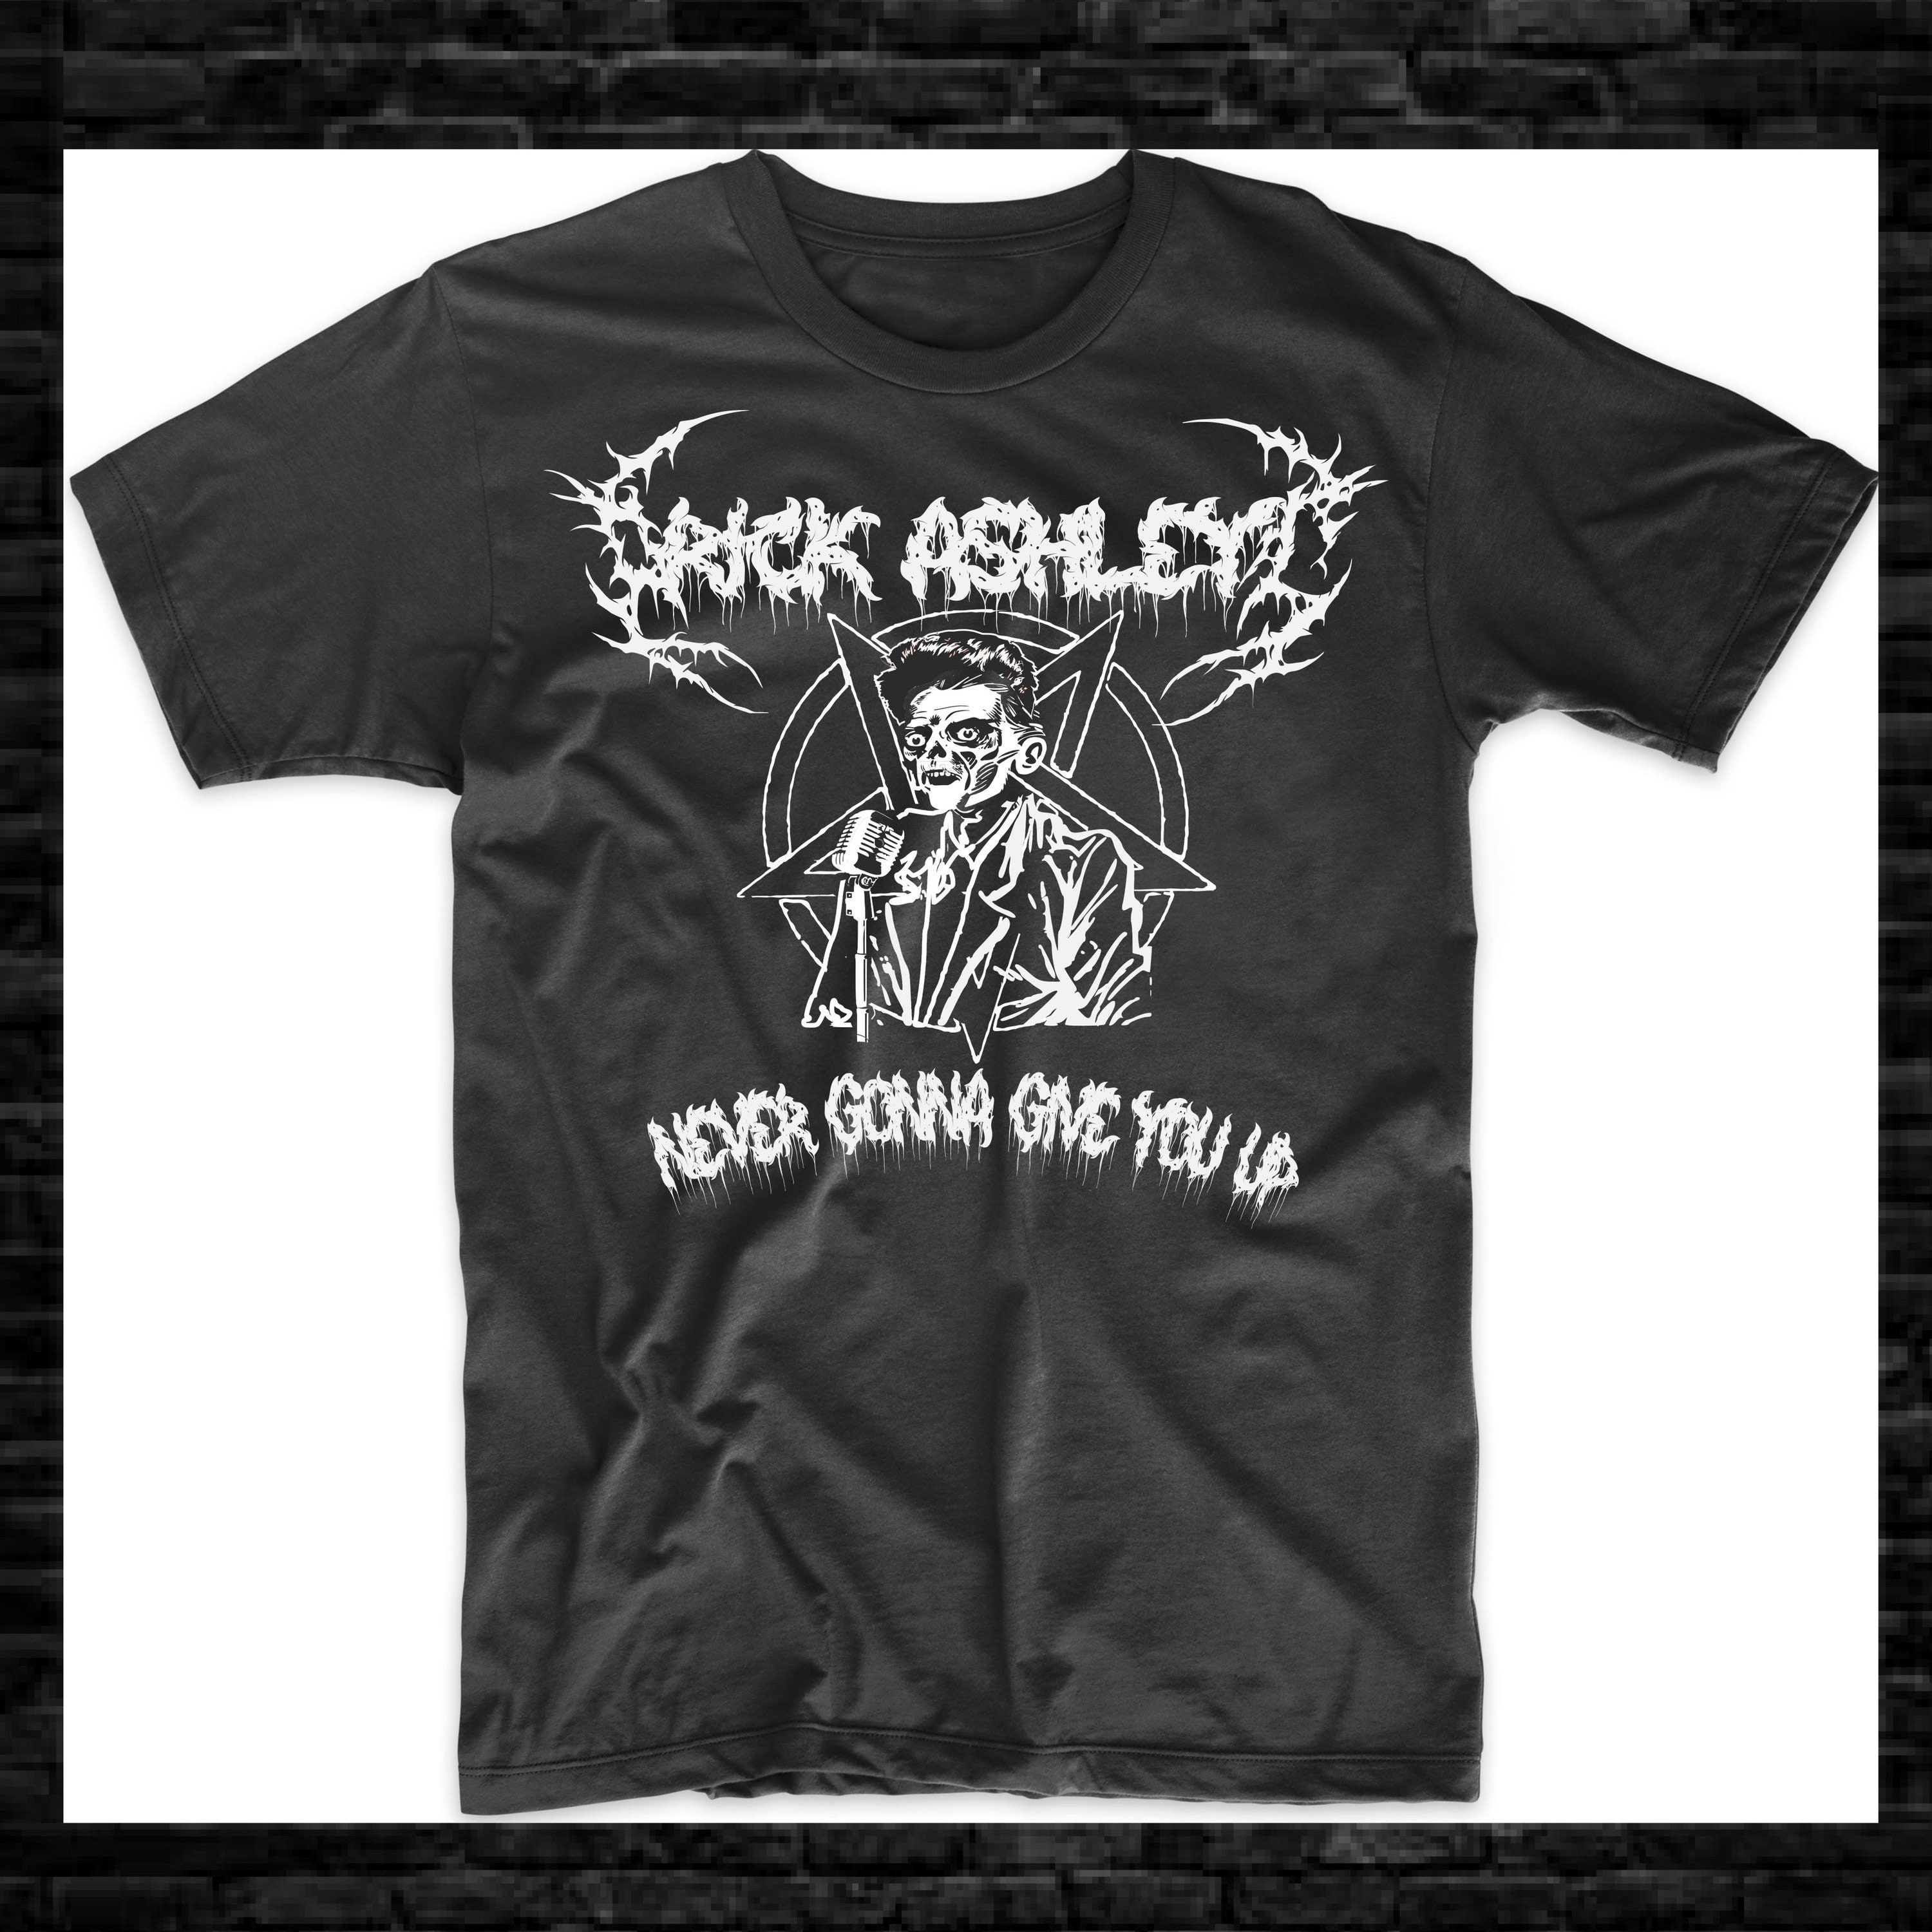 Rick Roll Definition Funny Early 2000's Prank Meme Rick Roll T-Shirt